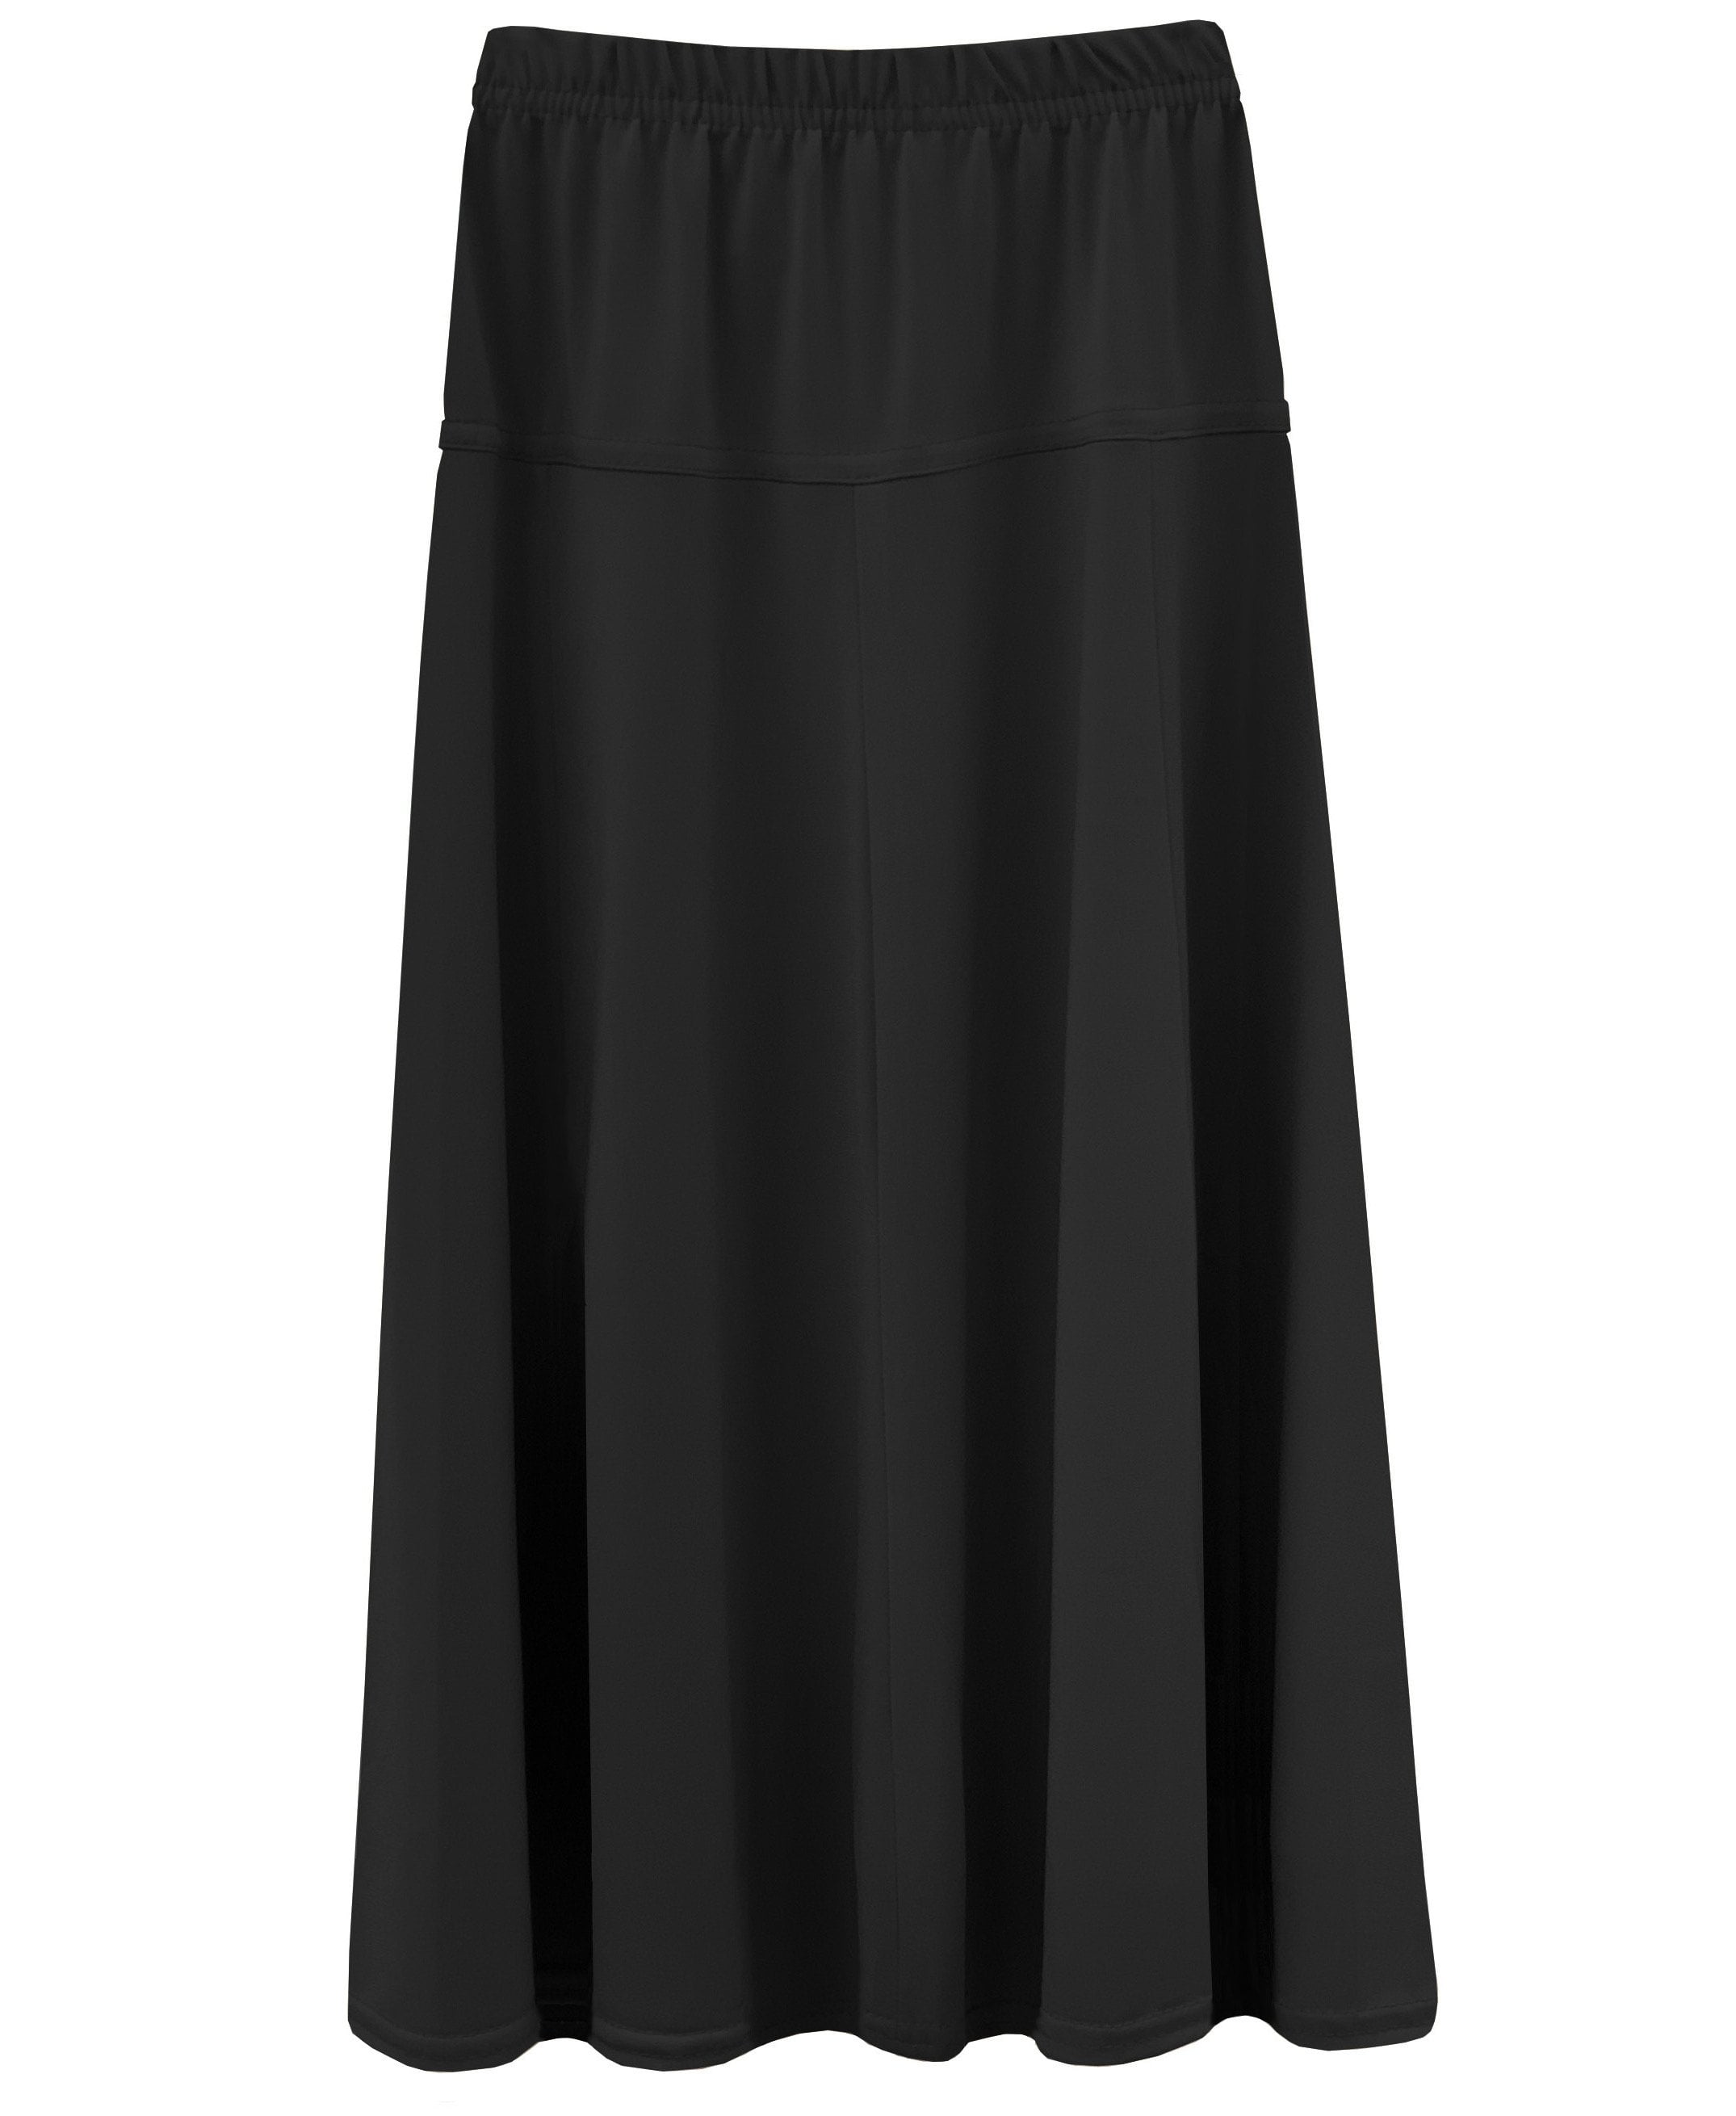 Girls 100% Cotton Tennis Skirt Skort Pink Navy Black Red Blue 7-16 SPECIAL VALUE 